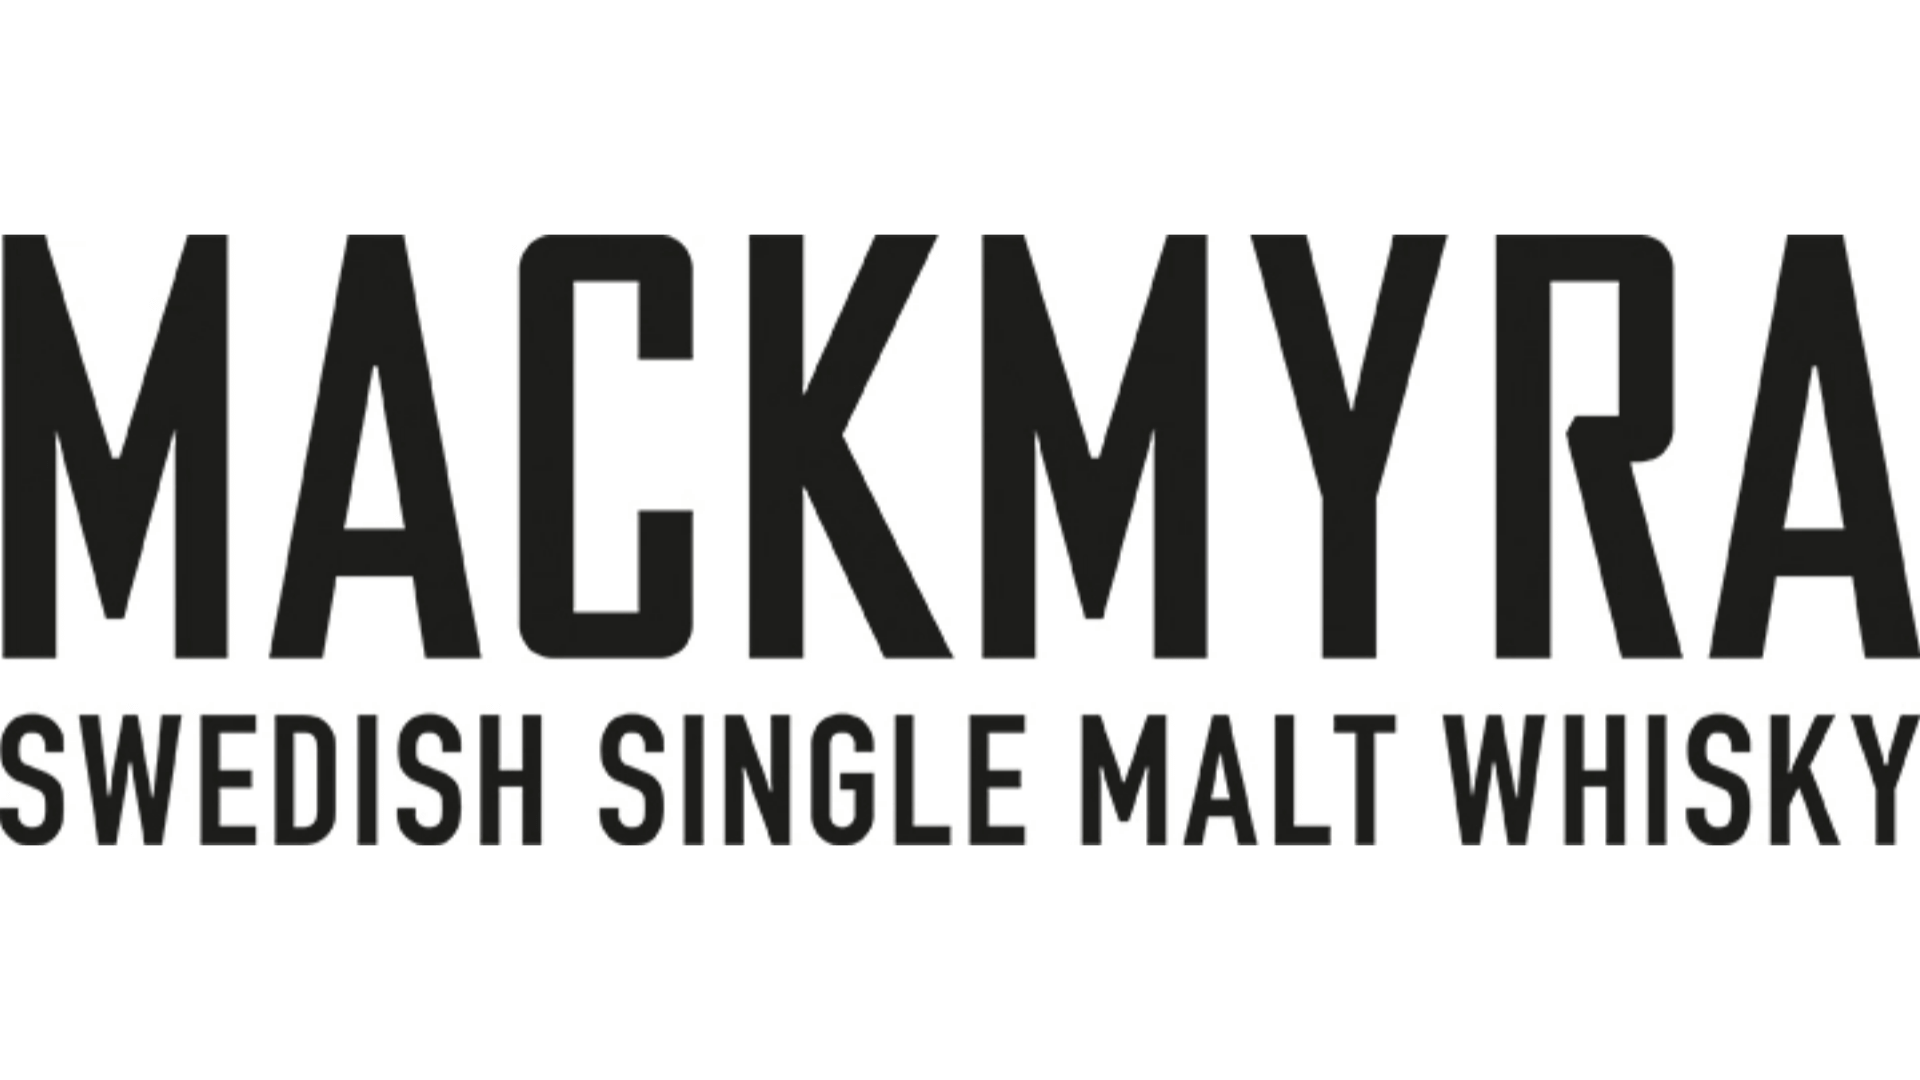 Mackmyra, Swedish Single Malt Whisky